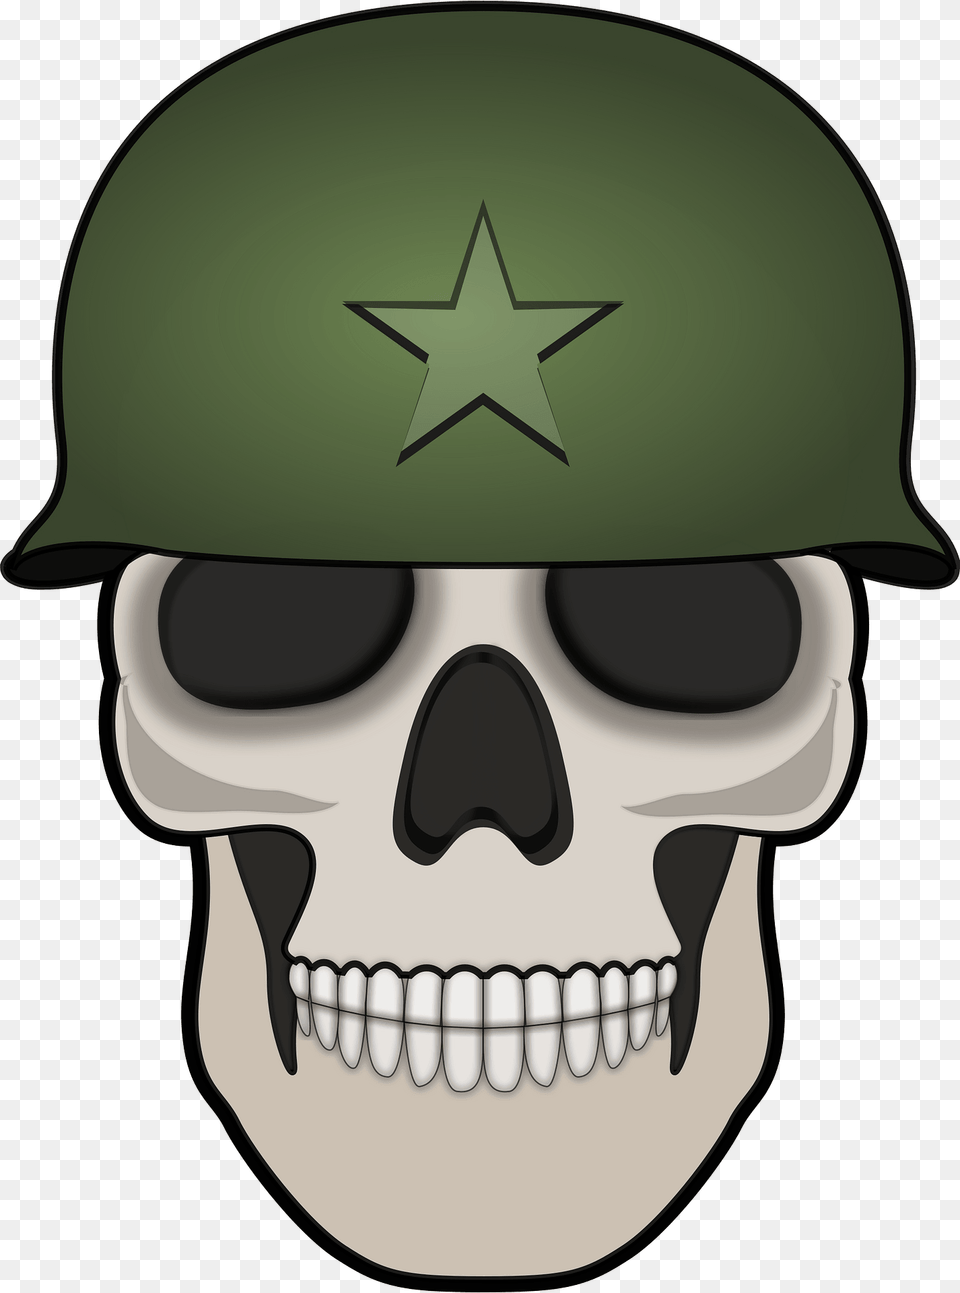 Reawakening Skull Wearing A Military Helmet Clipart, Clothing, Hardhat, Symbol Png